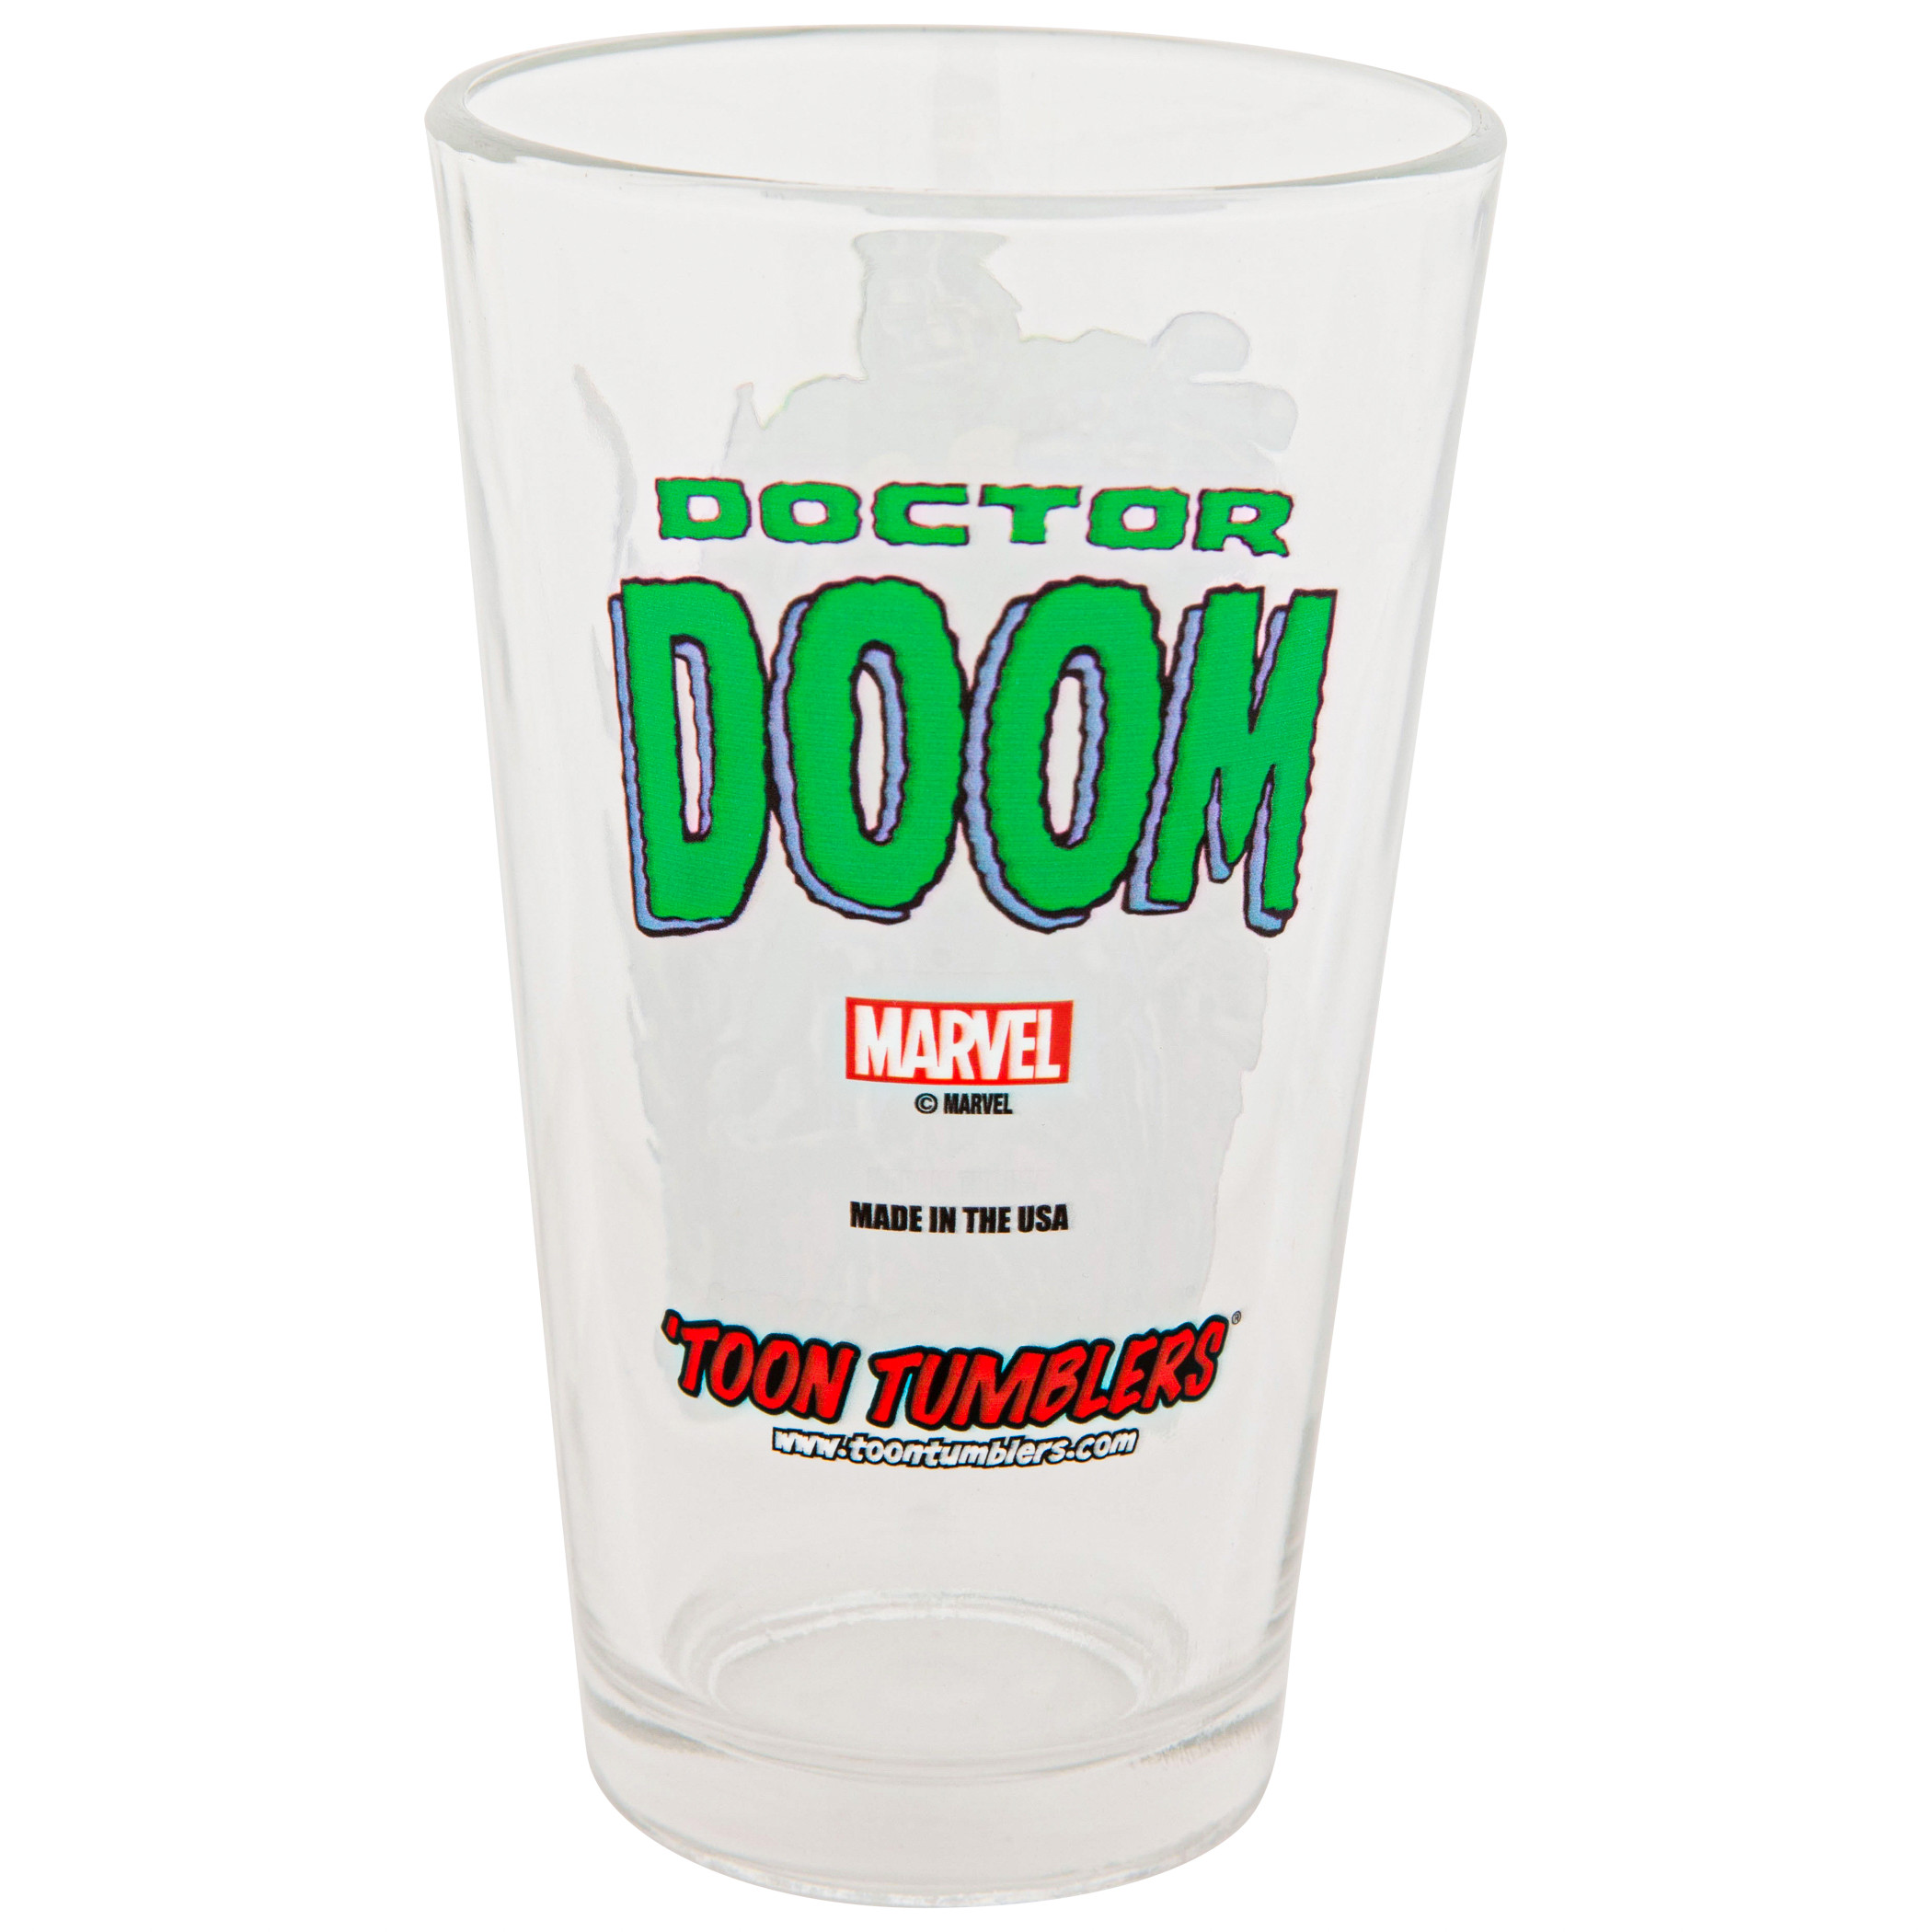 Dr. Doom Comic Art Pint Glass